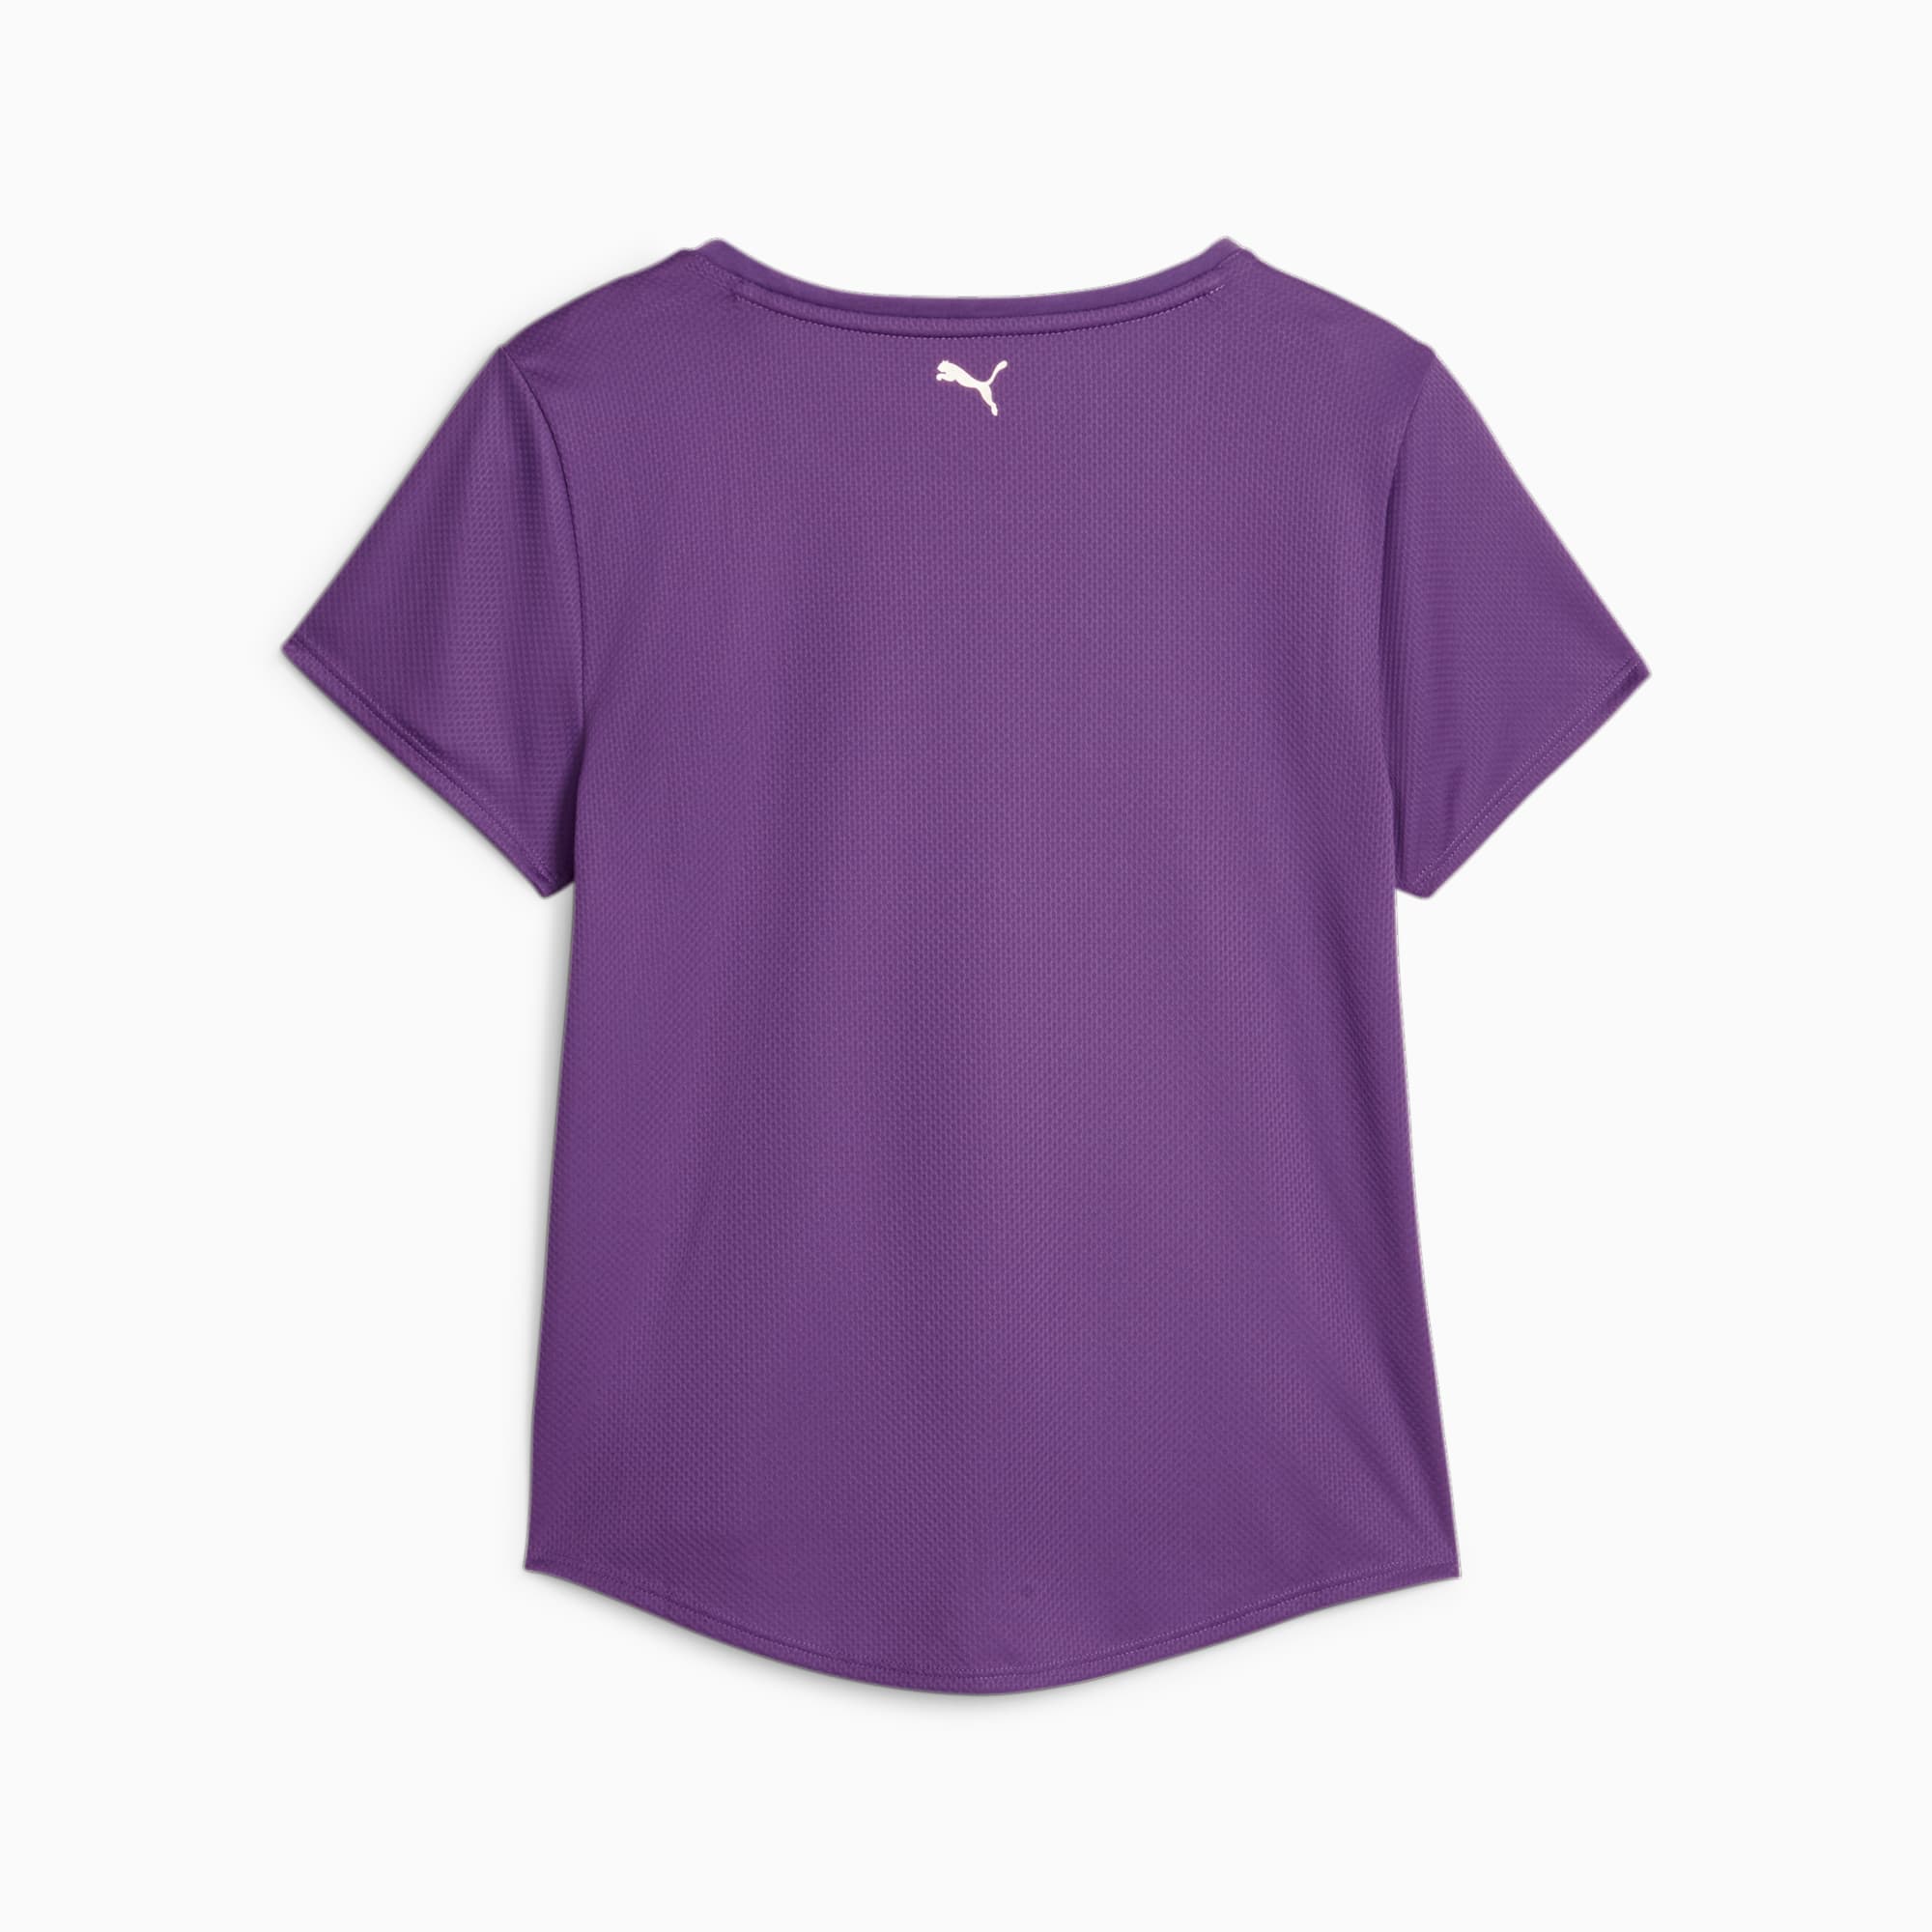 PUMA FIT Ultrabreathe Trainings-T-Shirt Damen, Lila/Gold, Größe: M, Kleidung